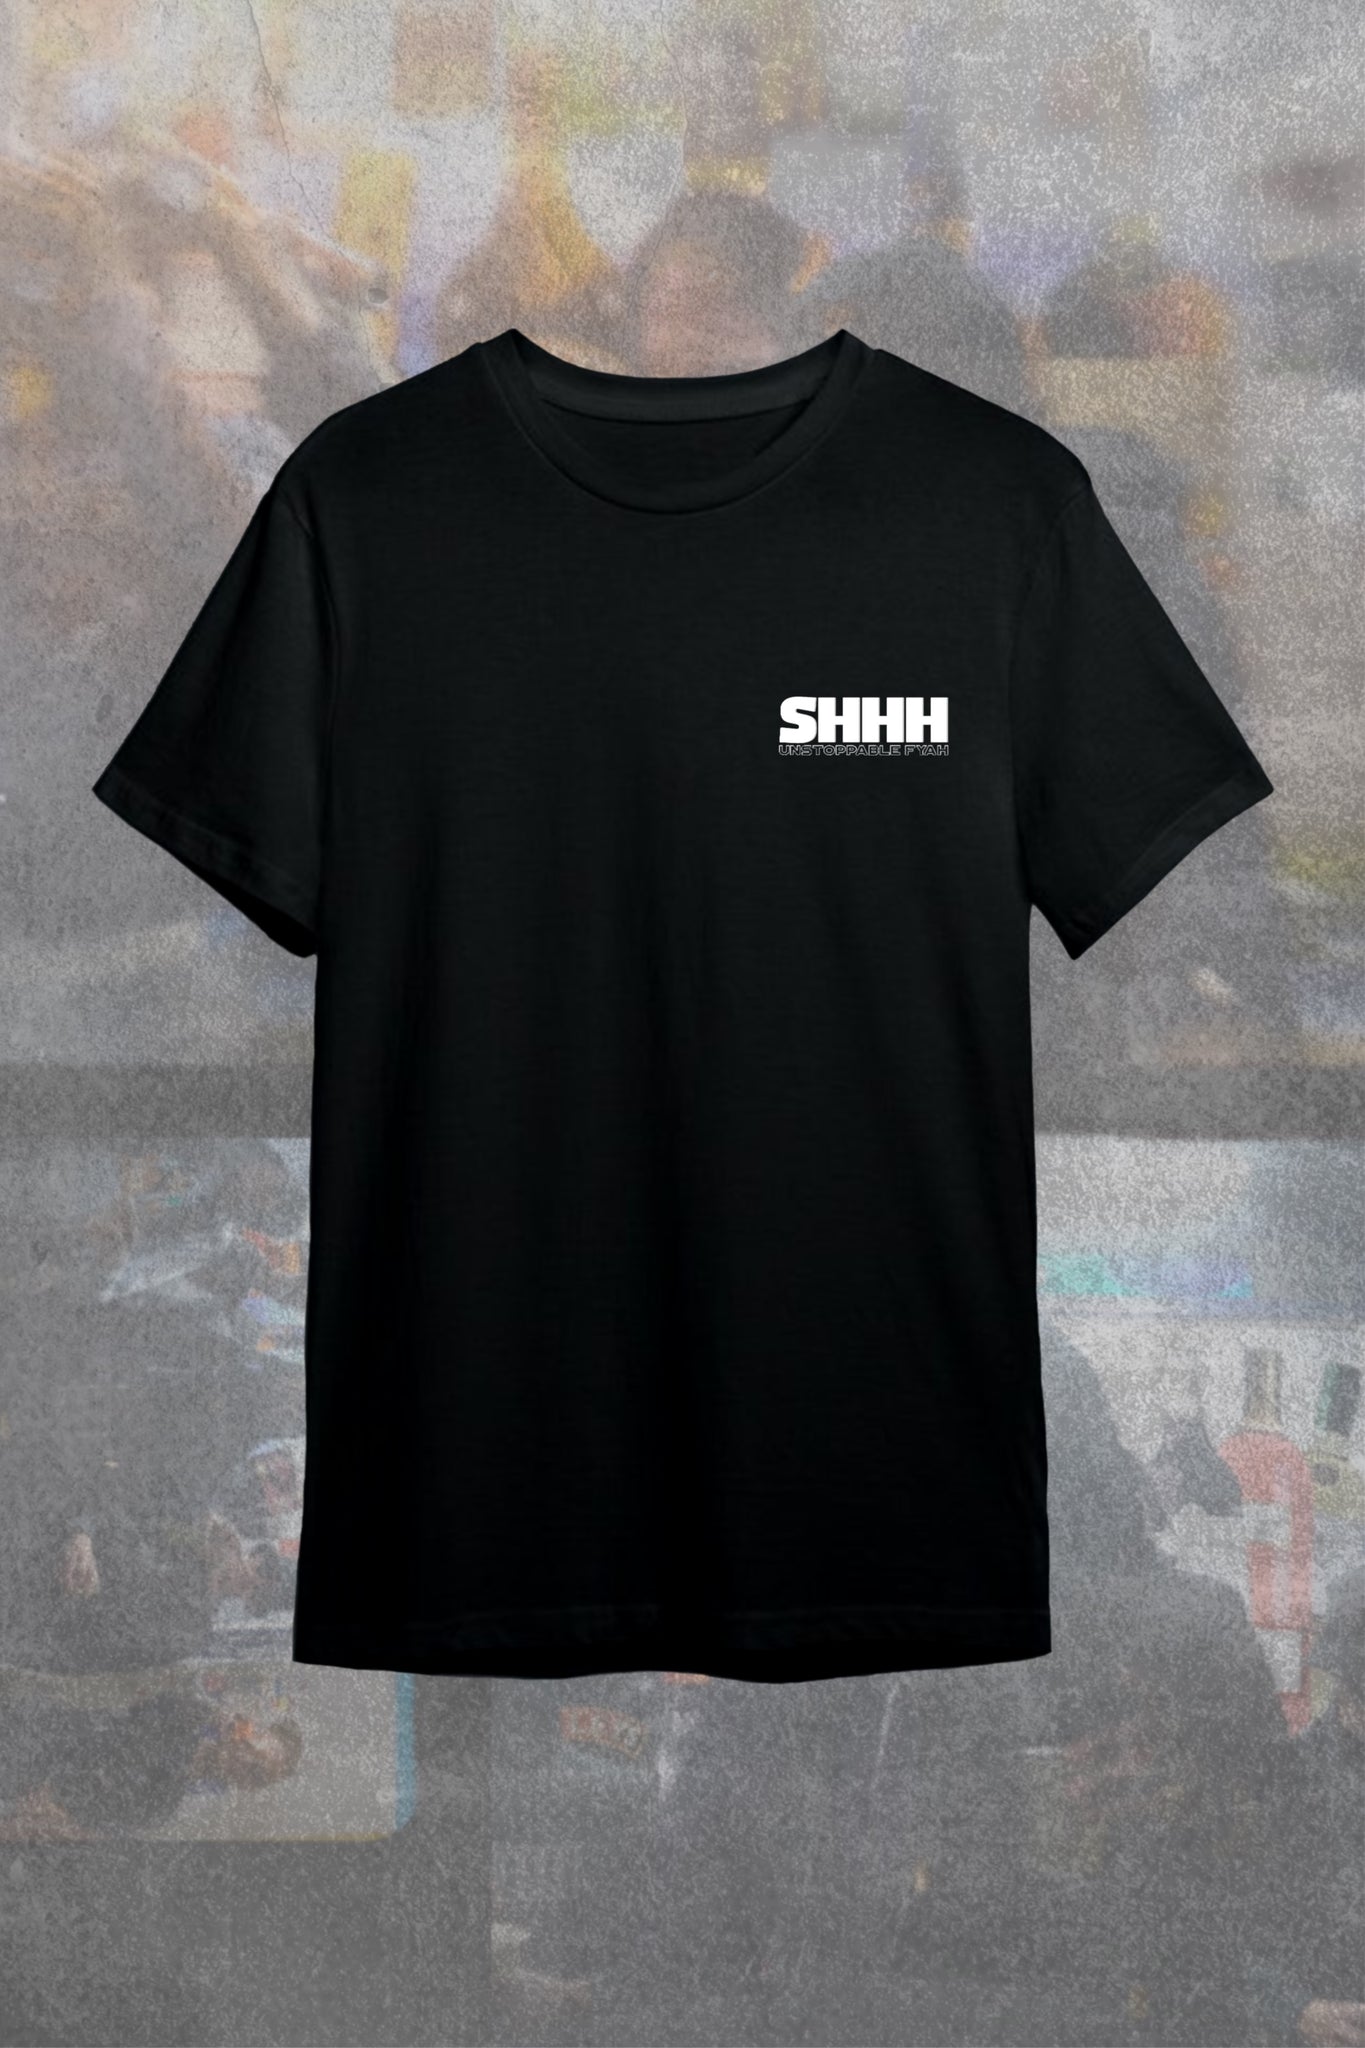 T-Shirt "Shhh"